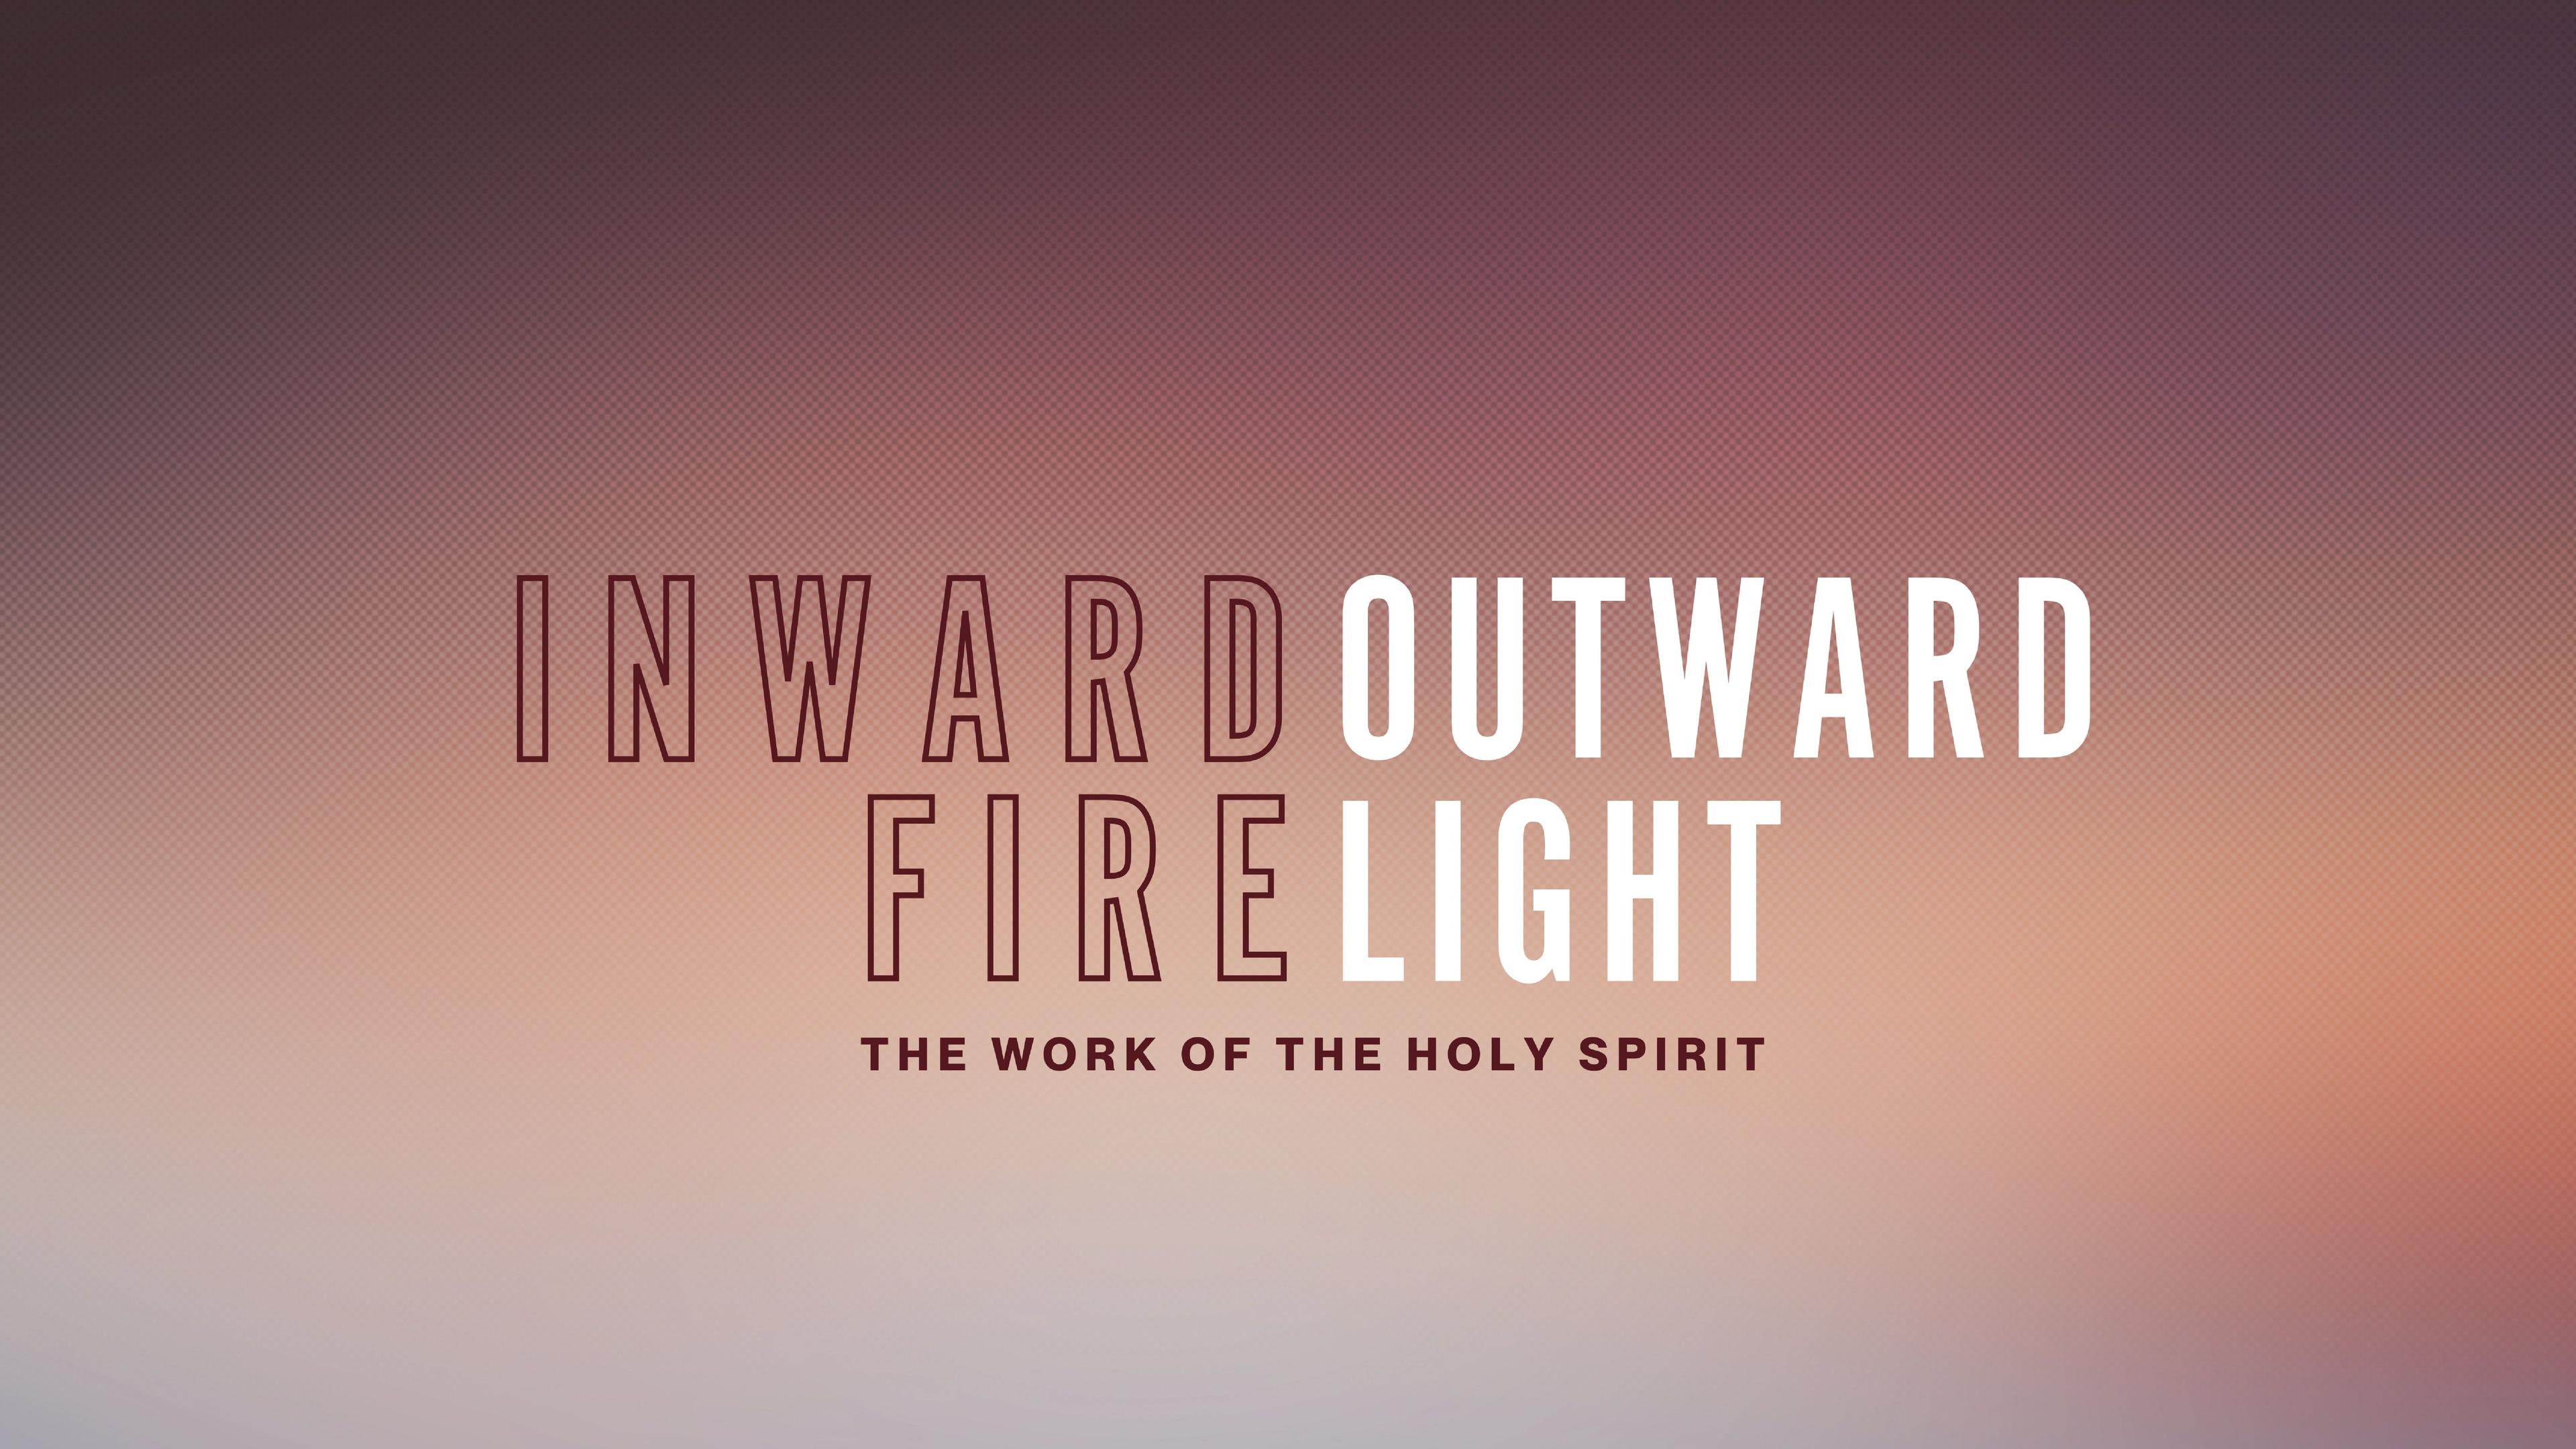 Sermon series graphic for Inward Fire Outward Light.